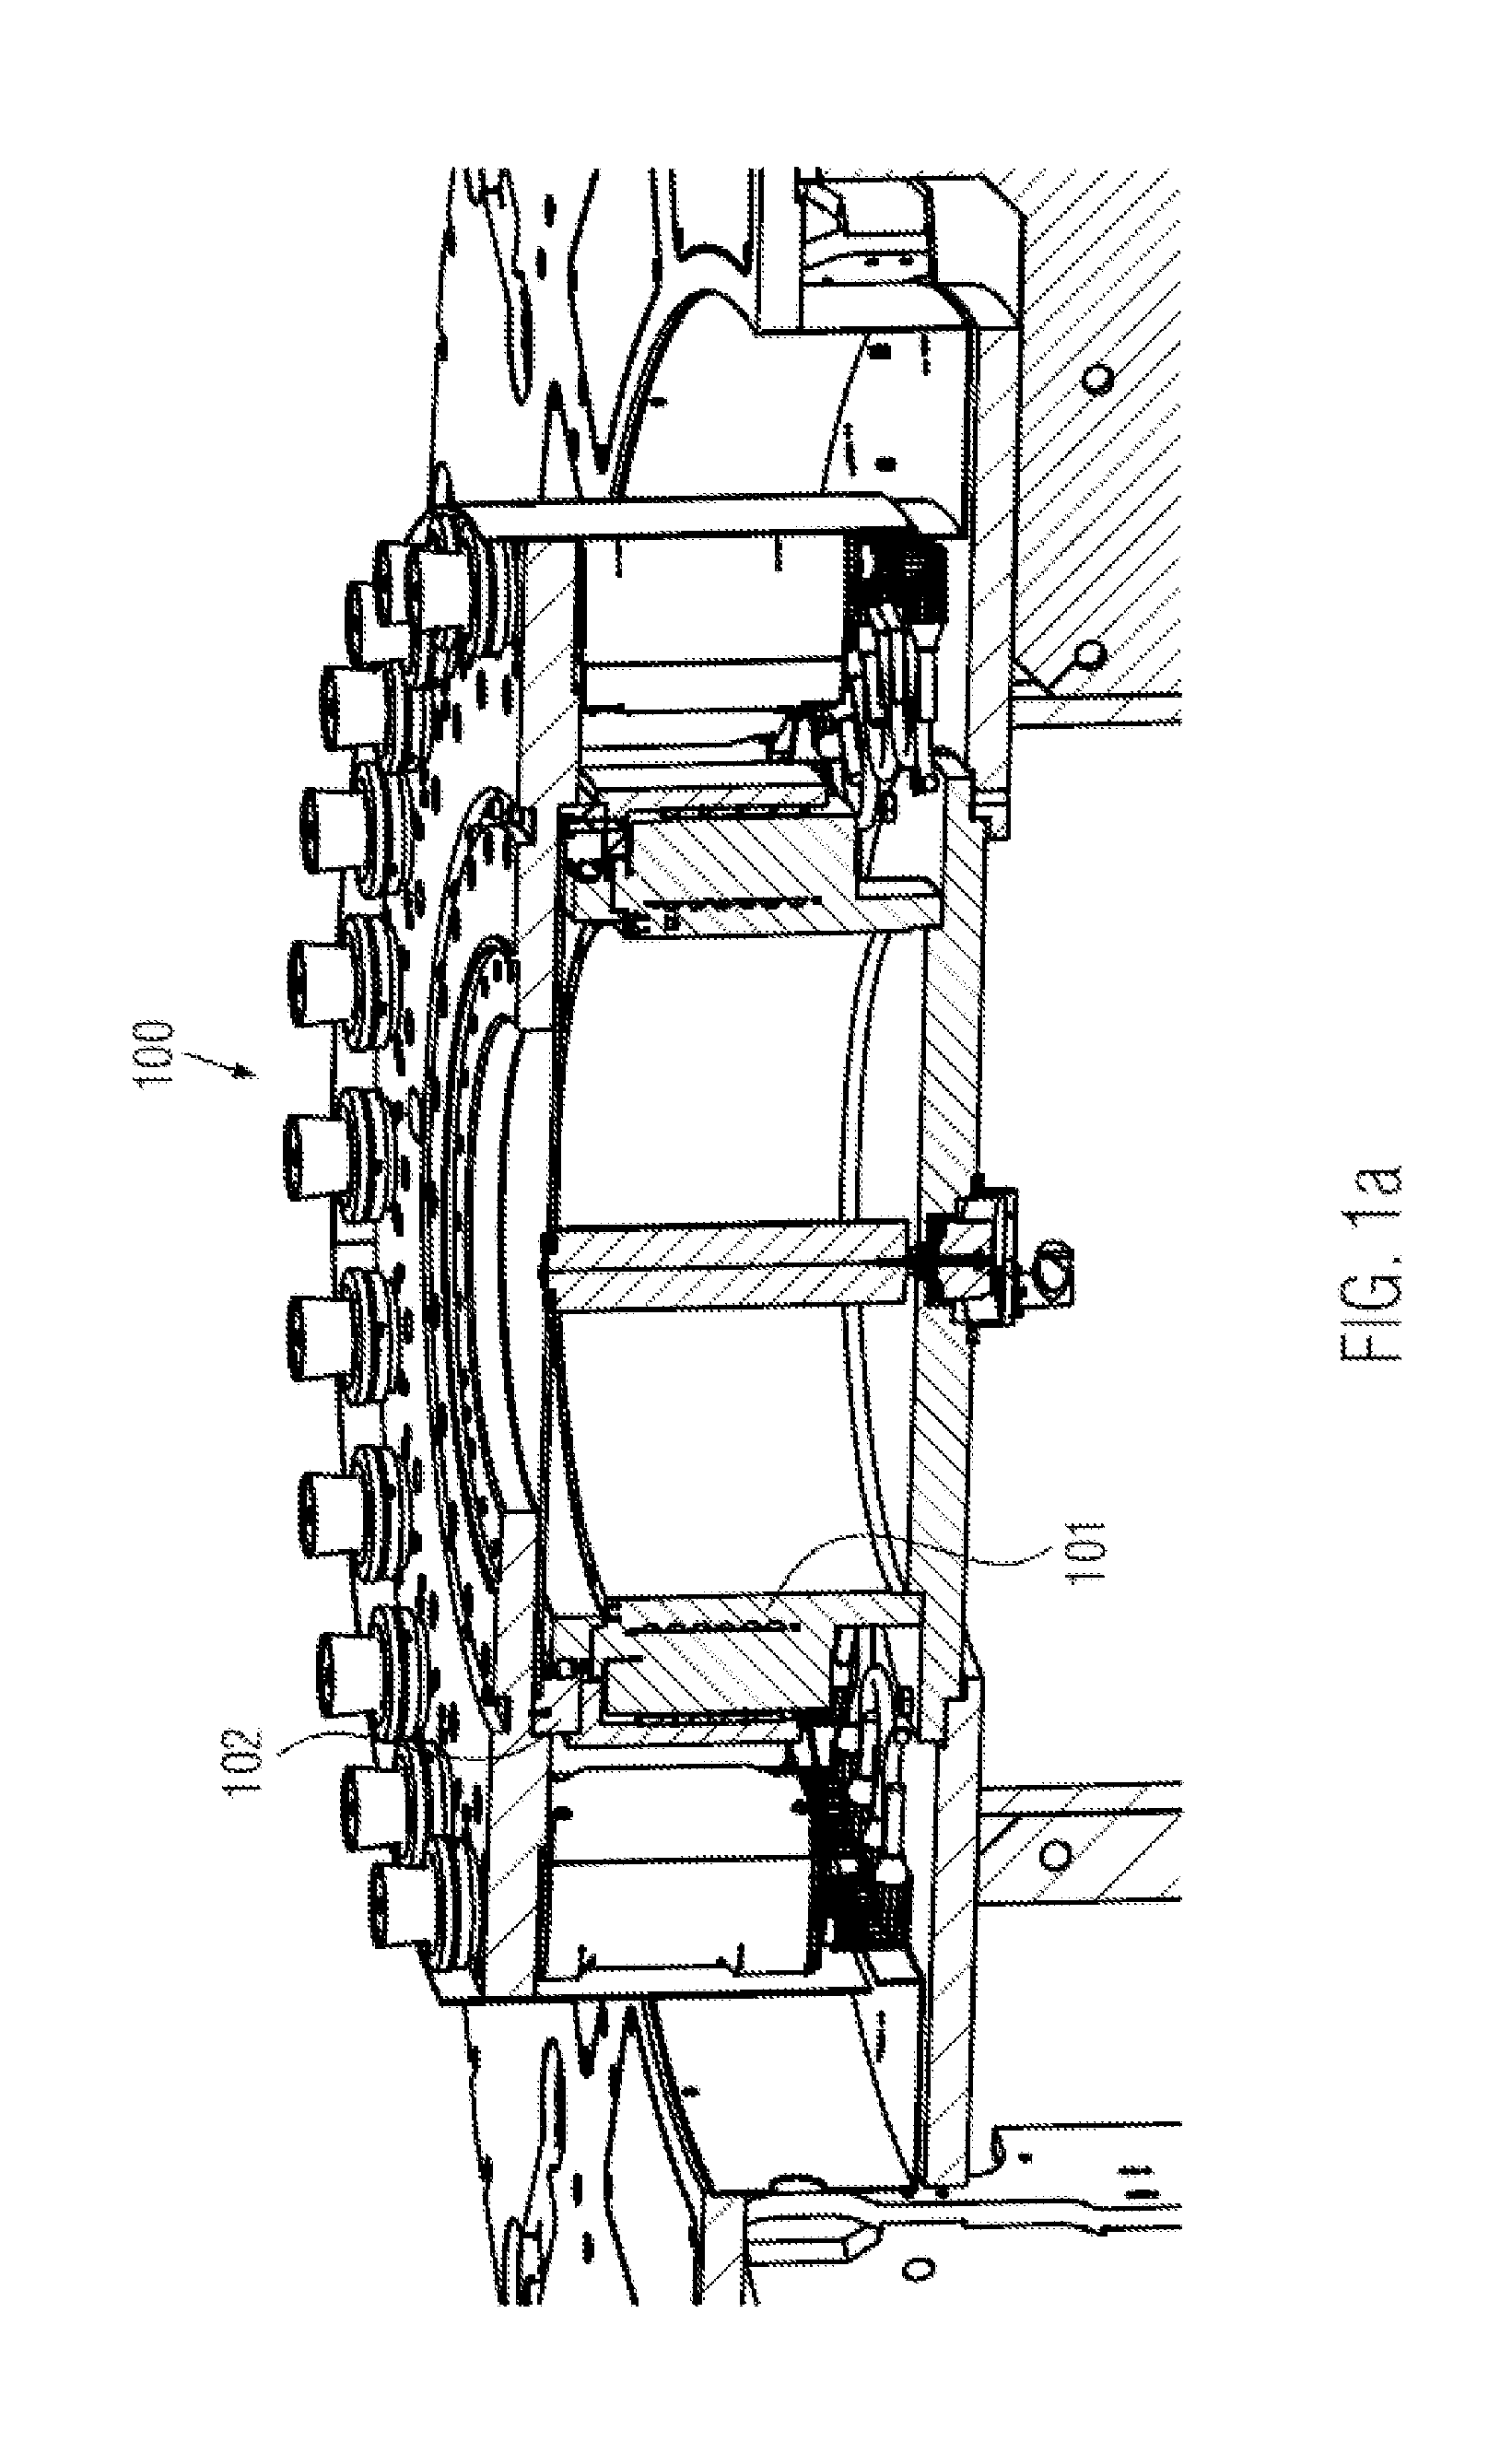 Rotary machine with direct drive